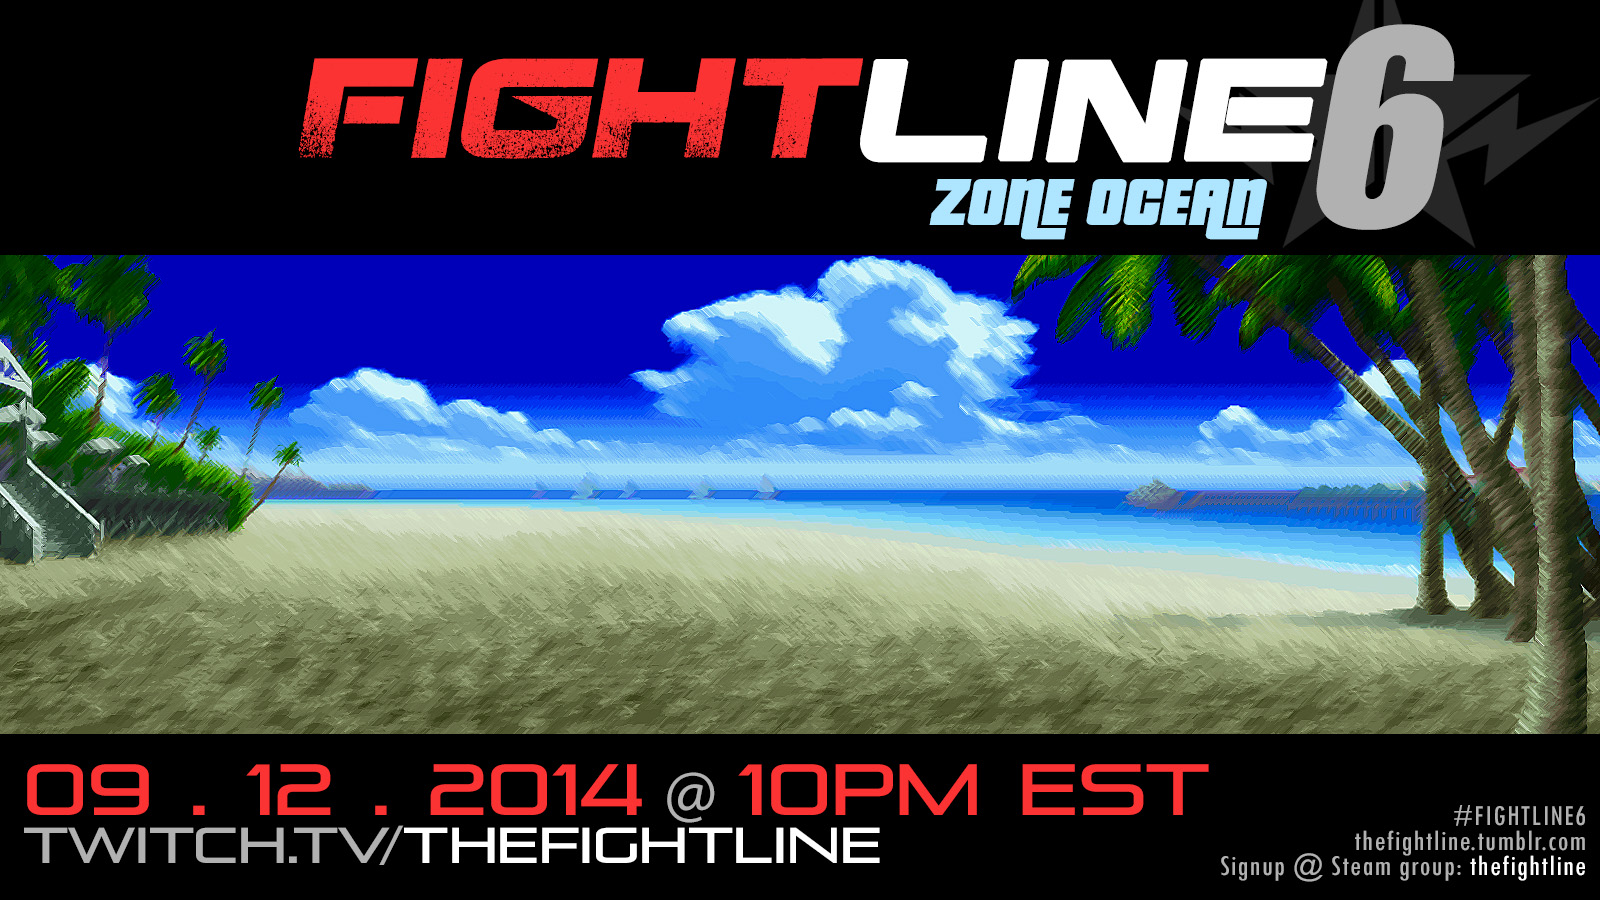 [IMAGE] Fightline 6 Promo